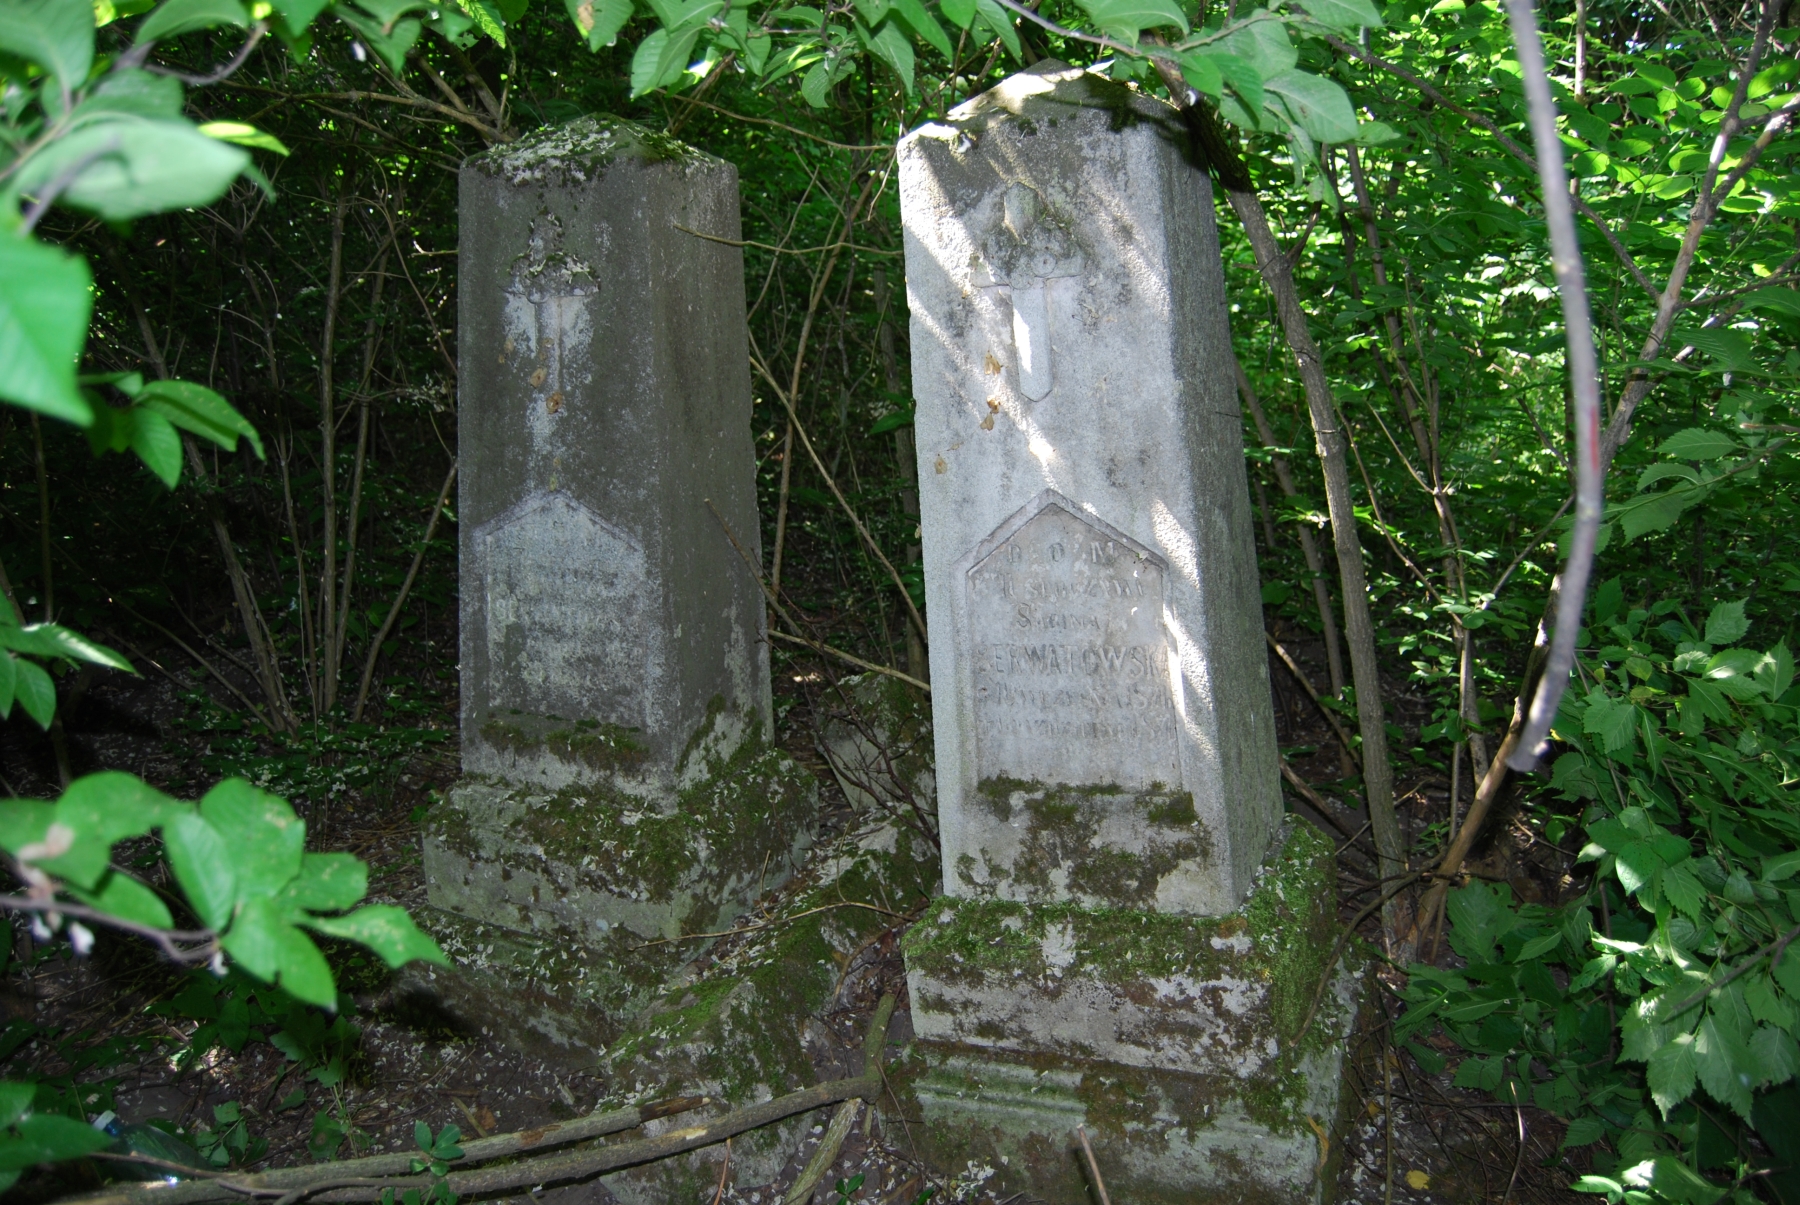 Tombstone of Sabina and Wojciech Serwatowski, cemetery in Bucniowie